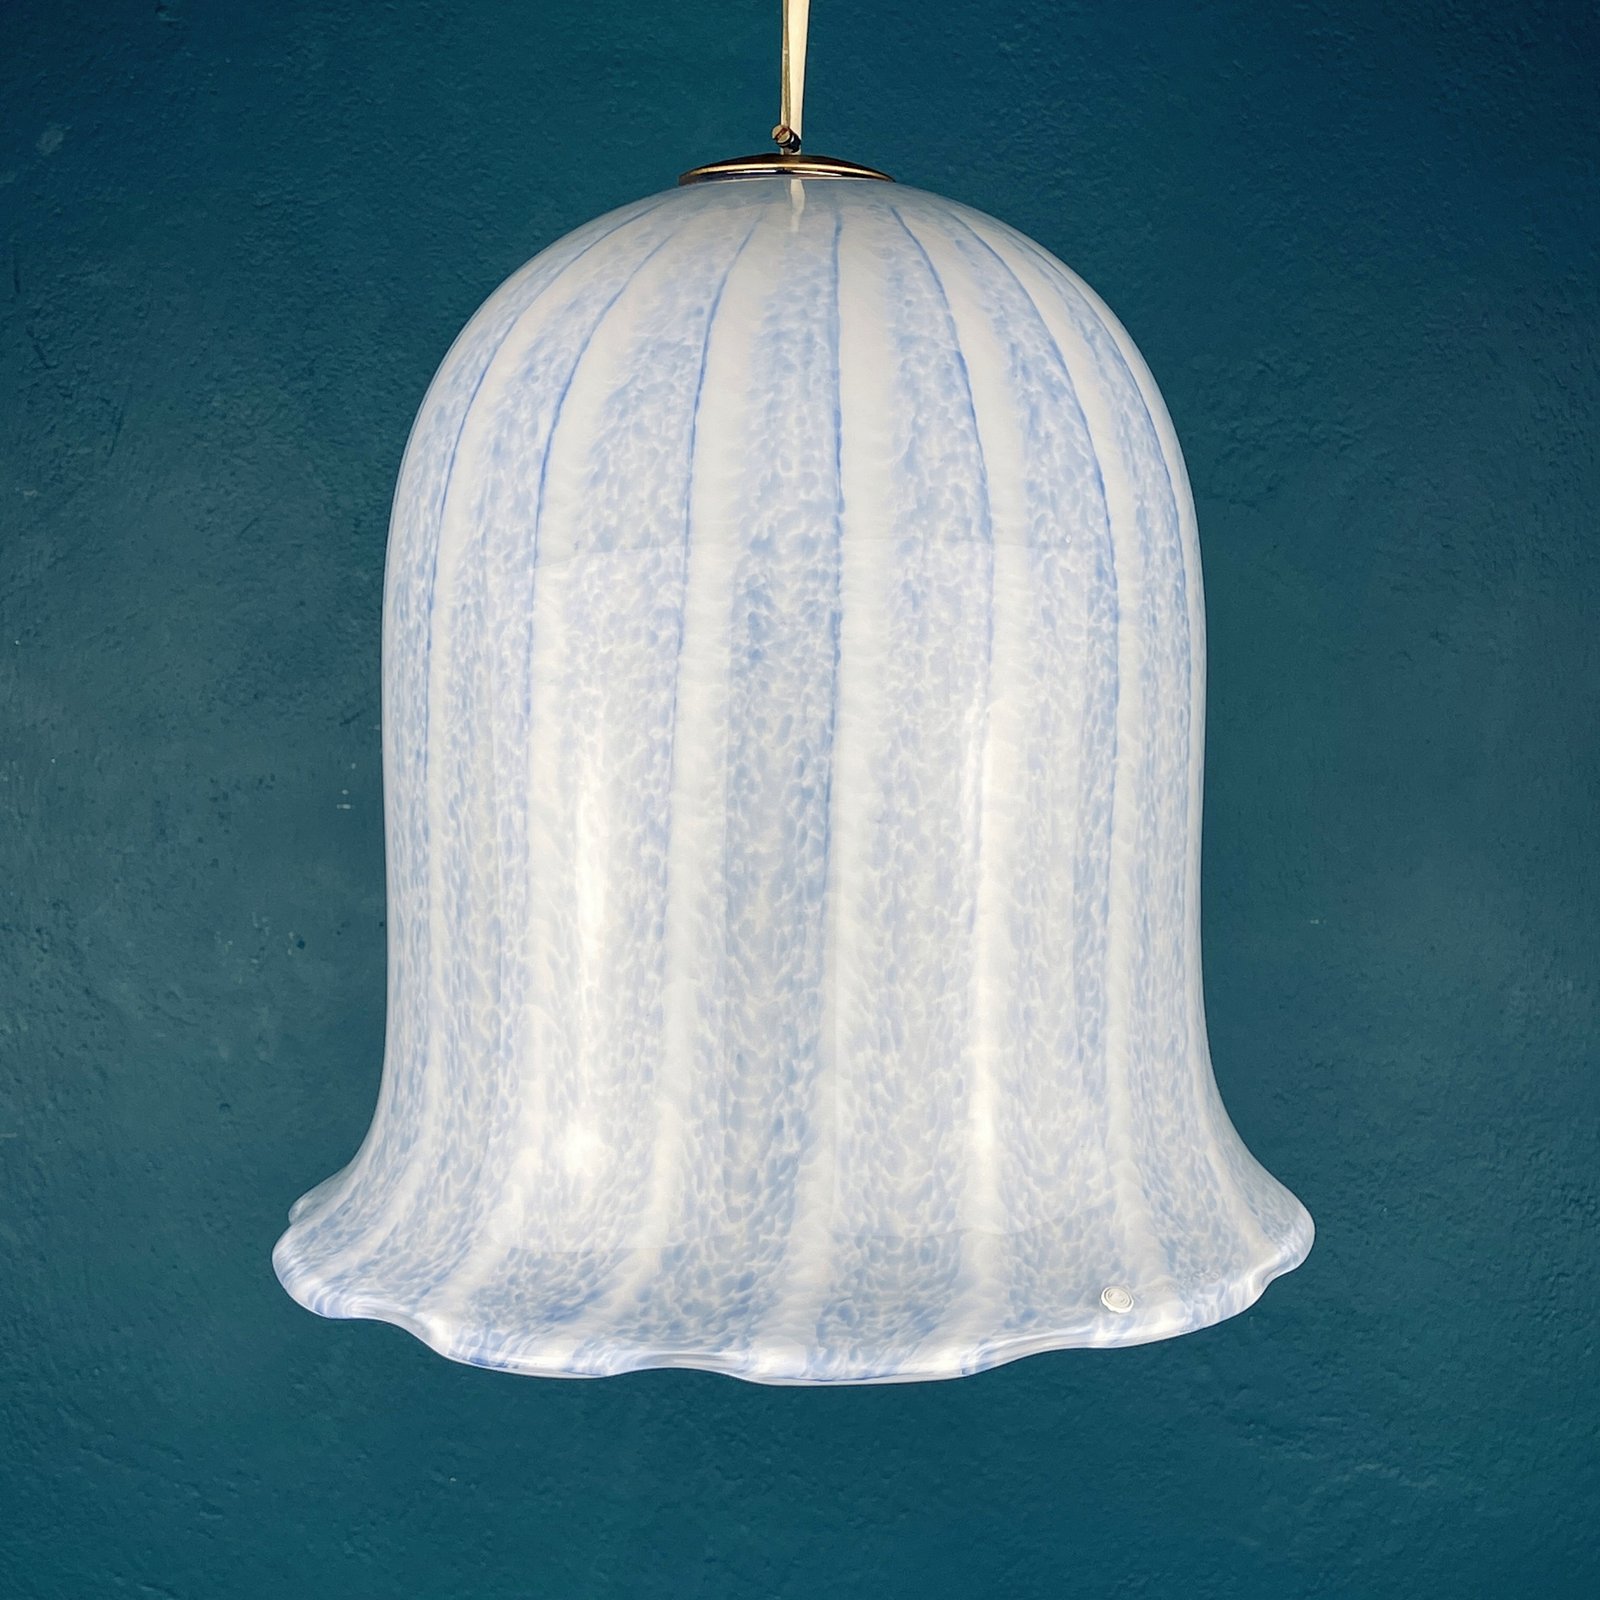 Vintage blue murano pendant lamp by manufacture "La Murrina" Italy 1980s MCM unique italian lighting